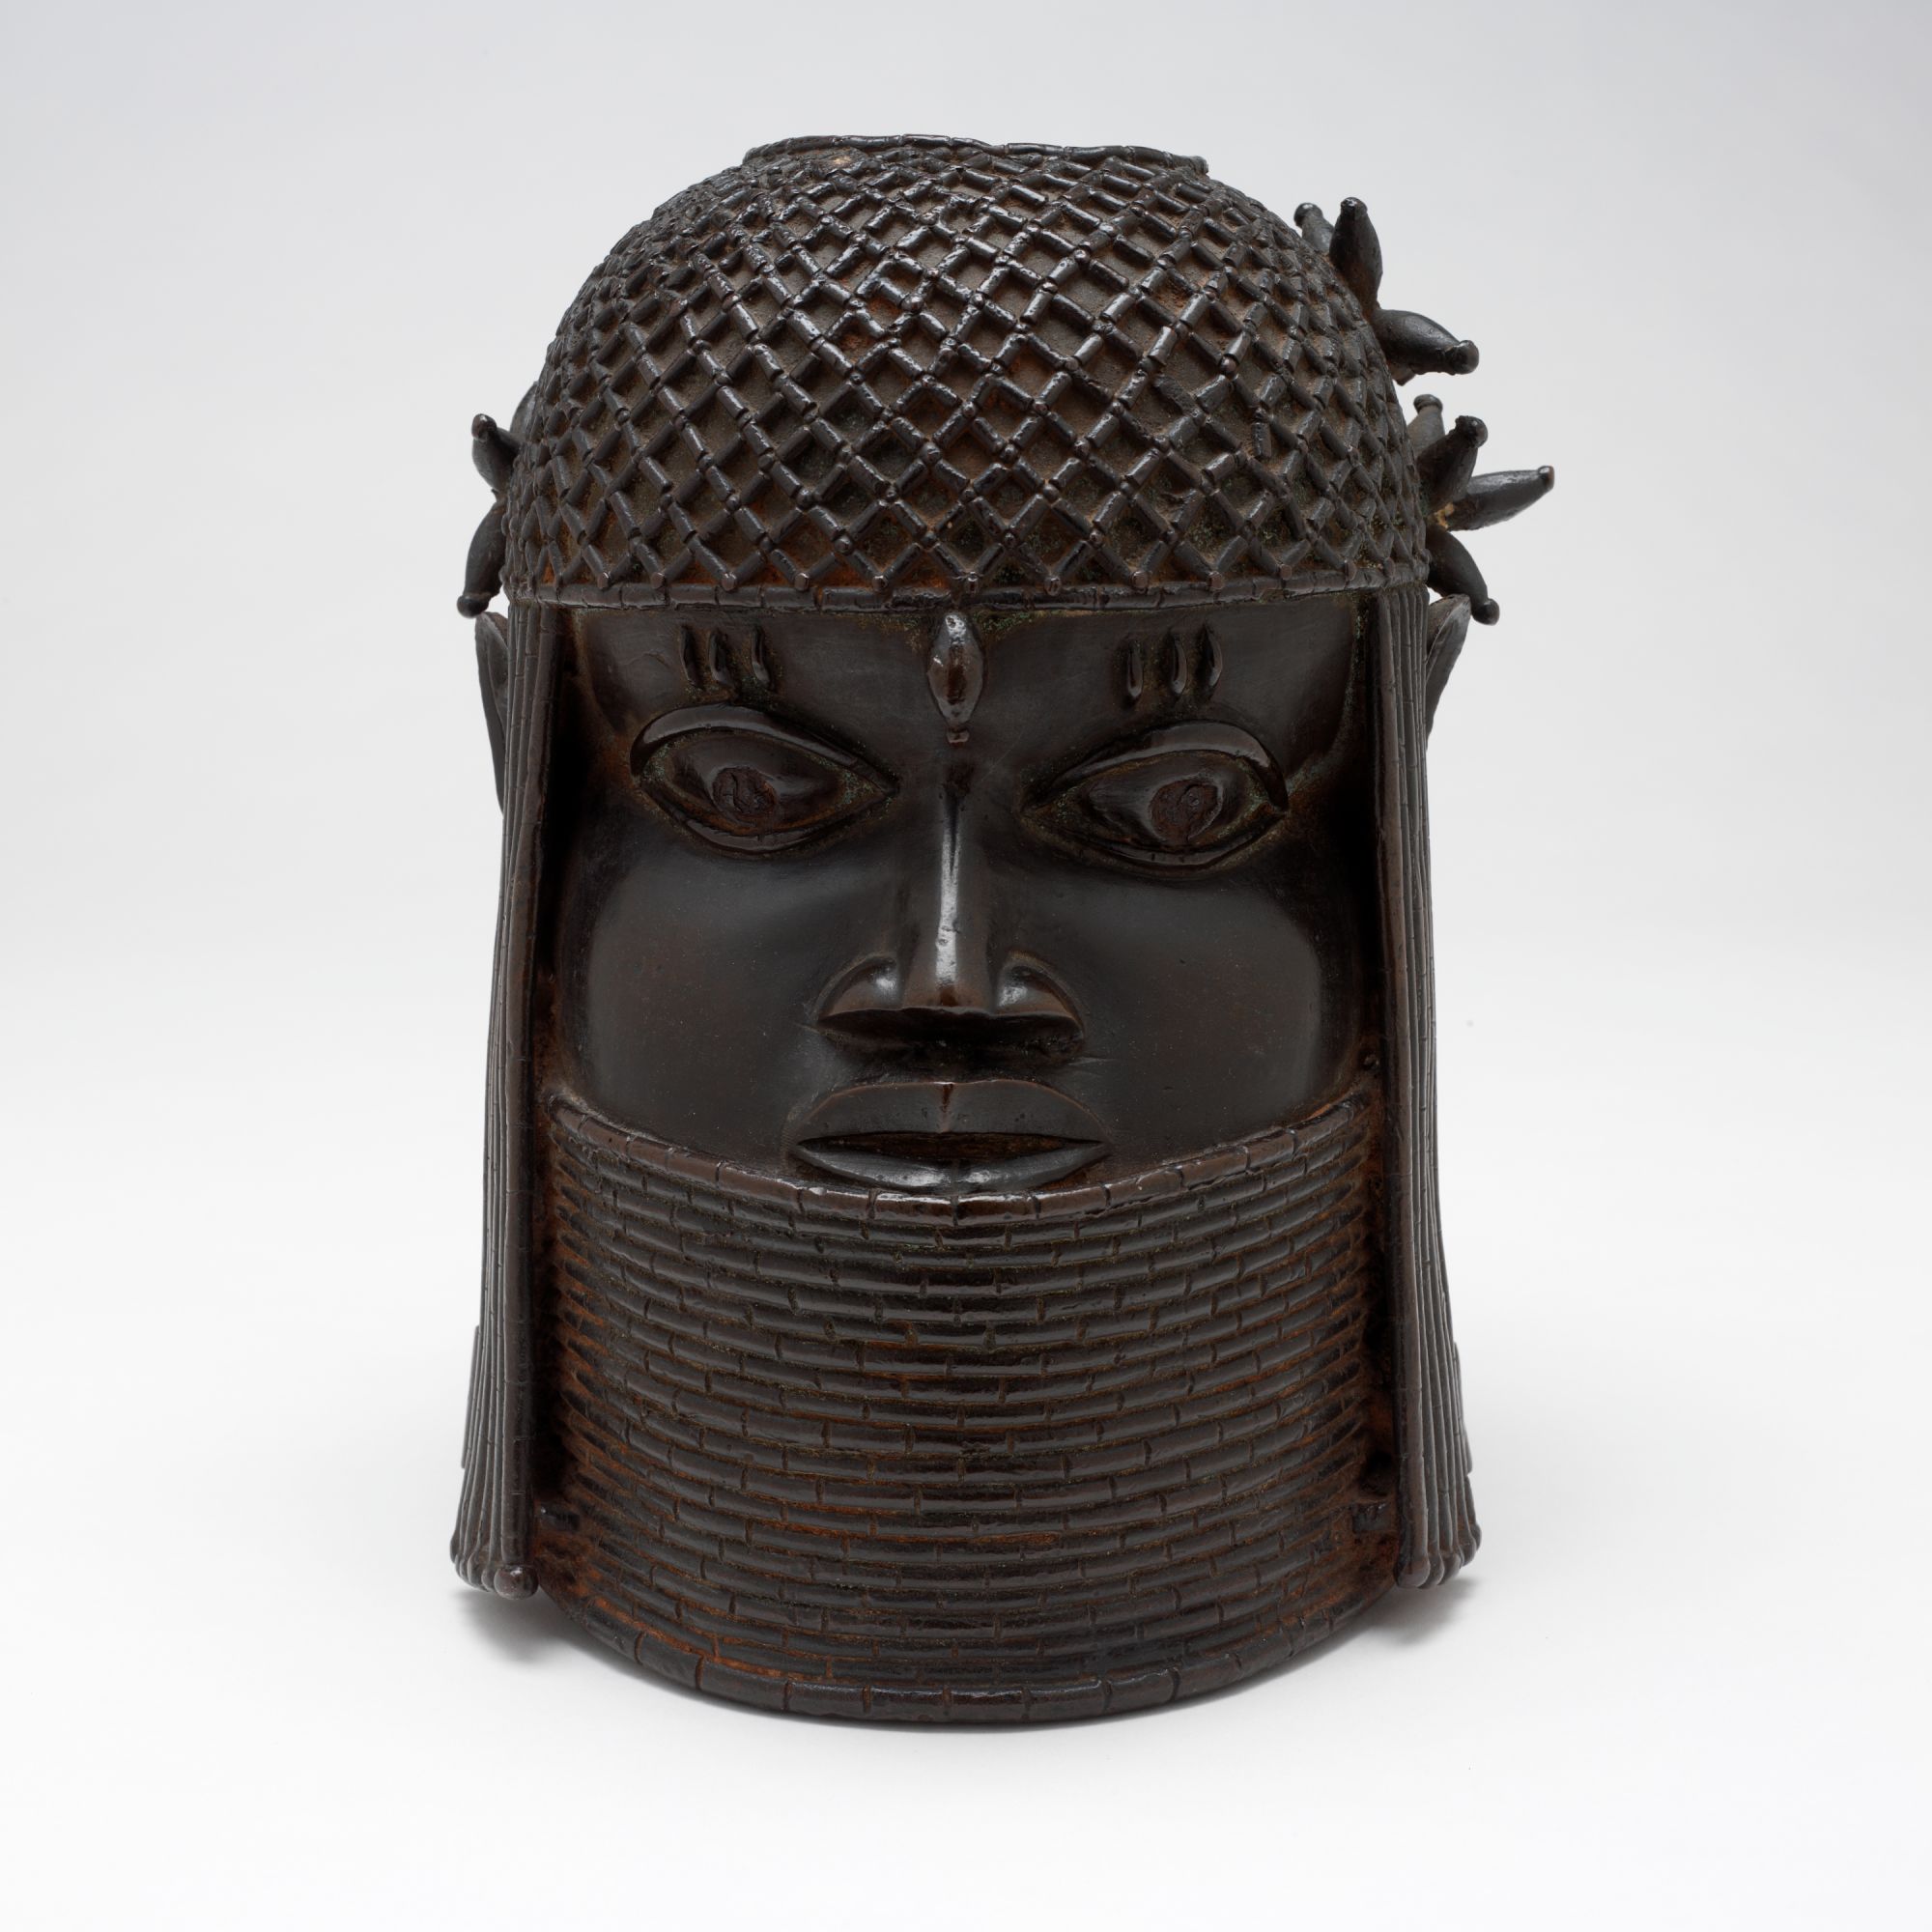 01 benin bronzes us museums nigeria